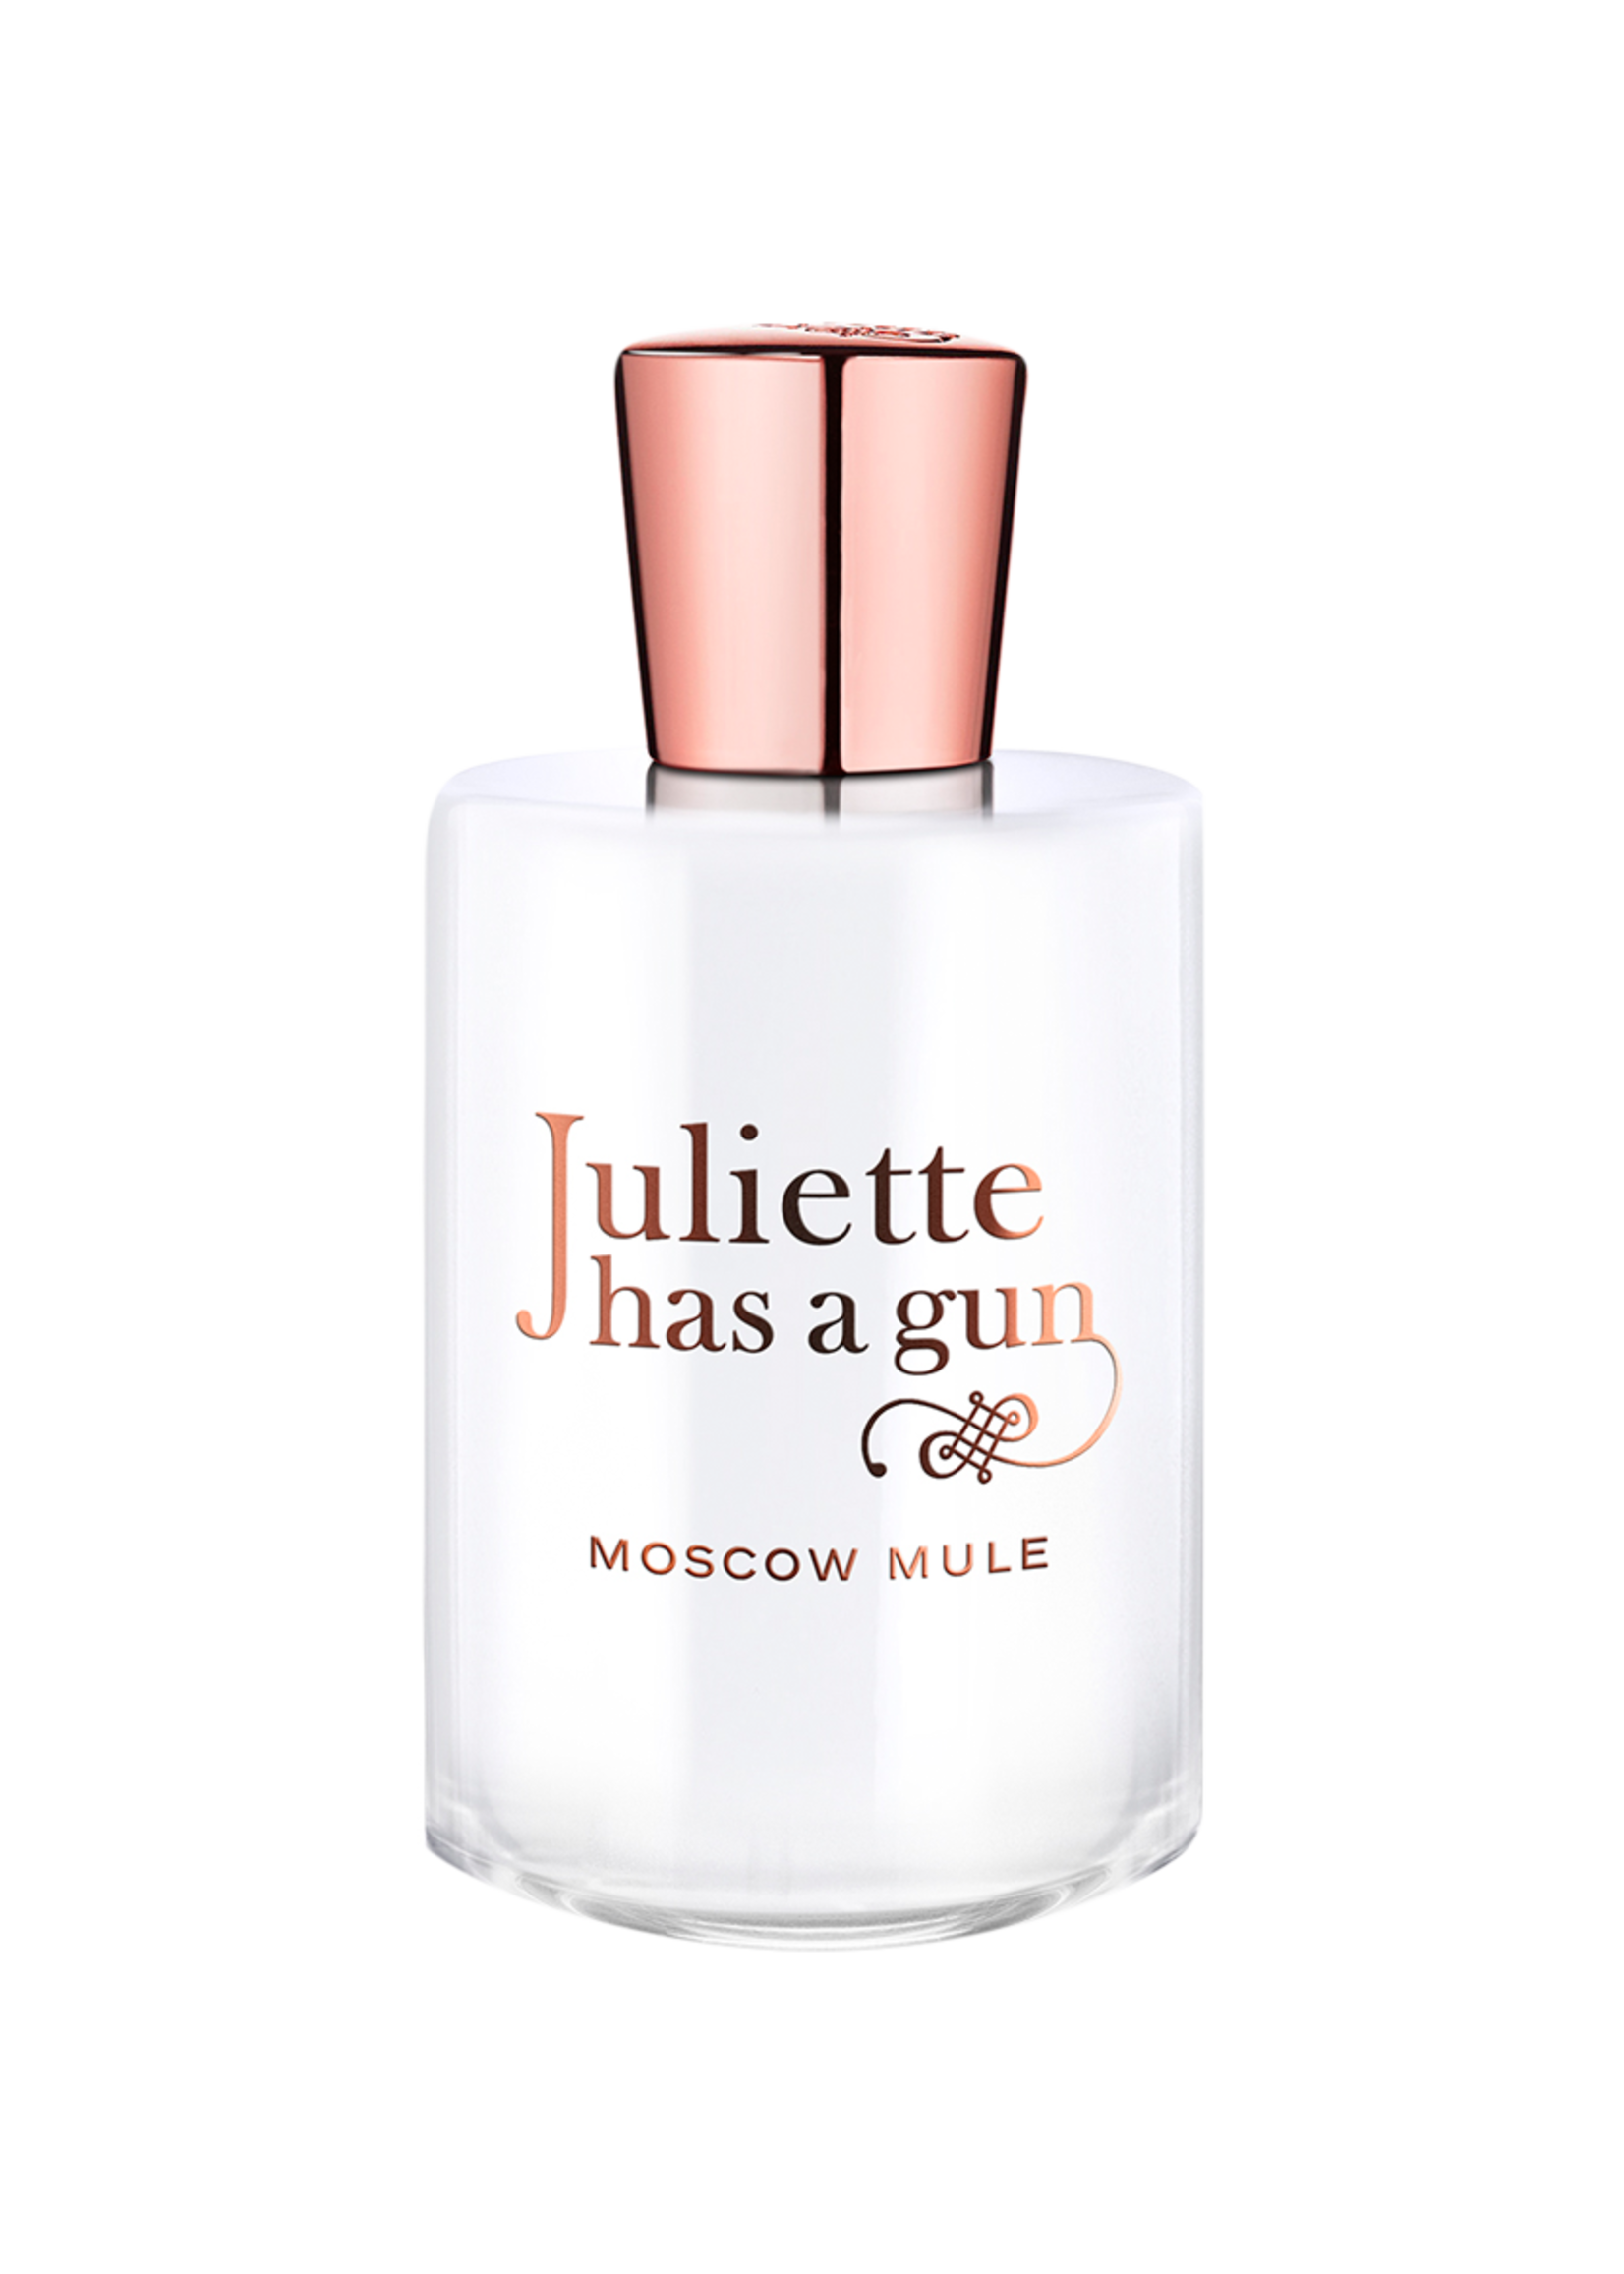 Juliette Has a Gun MOSCOW MULE